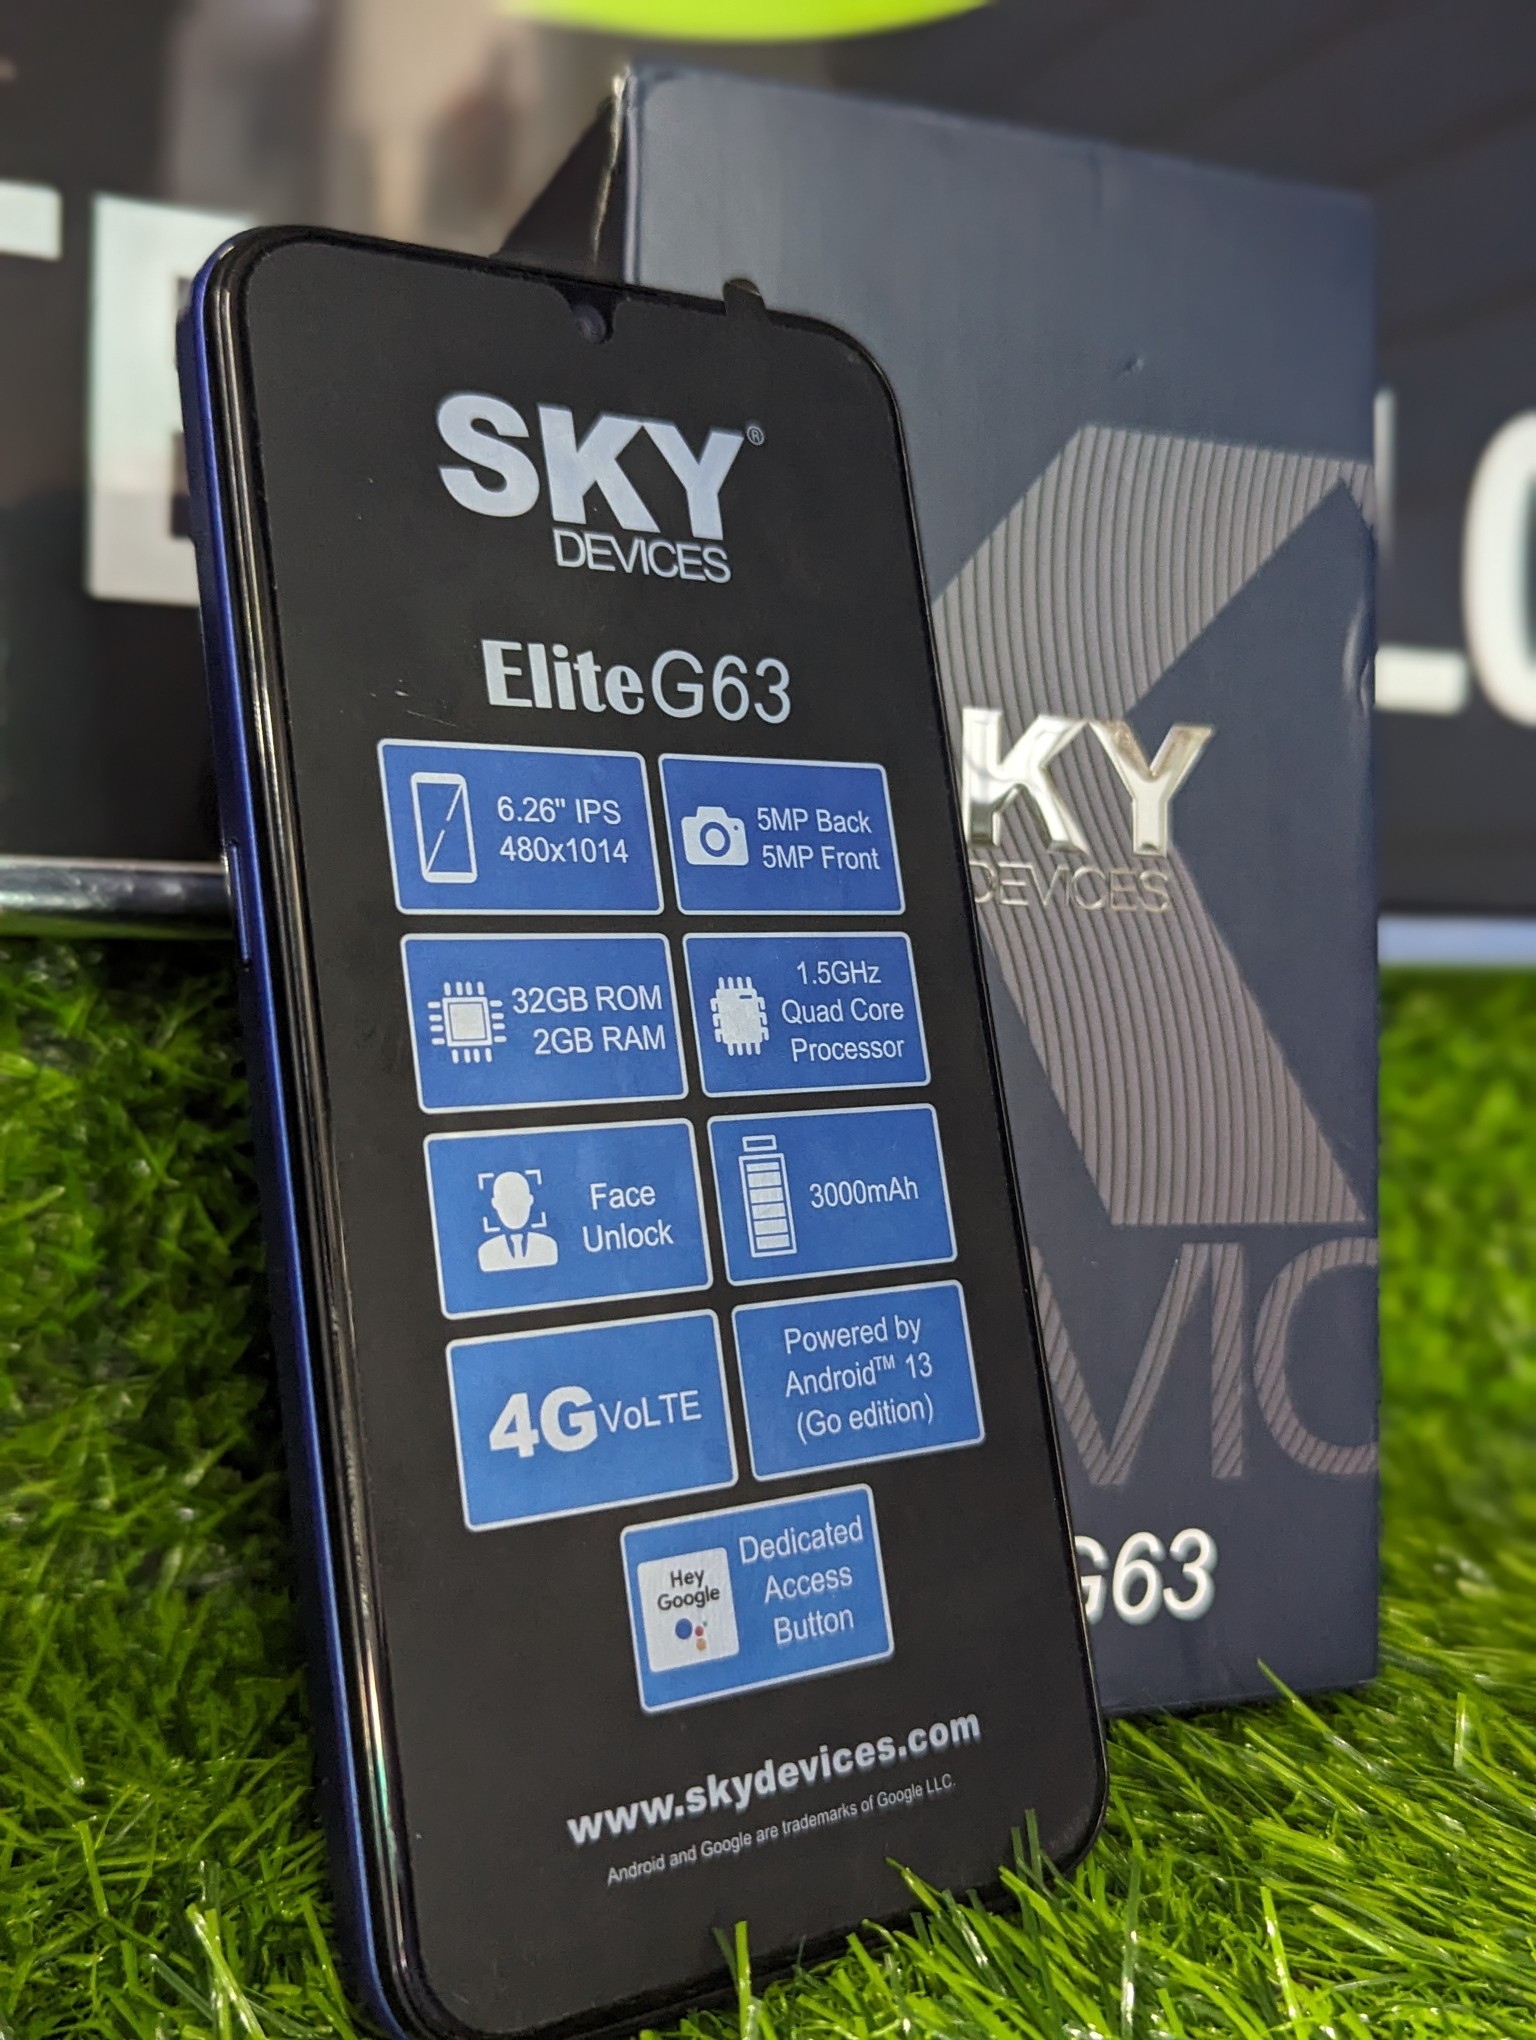 celulares y tabletas - Celulares nuevos Sky  4